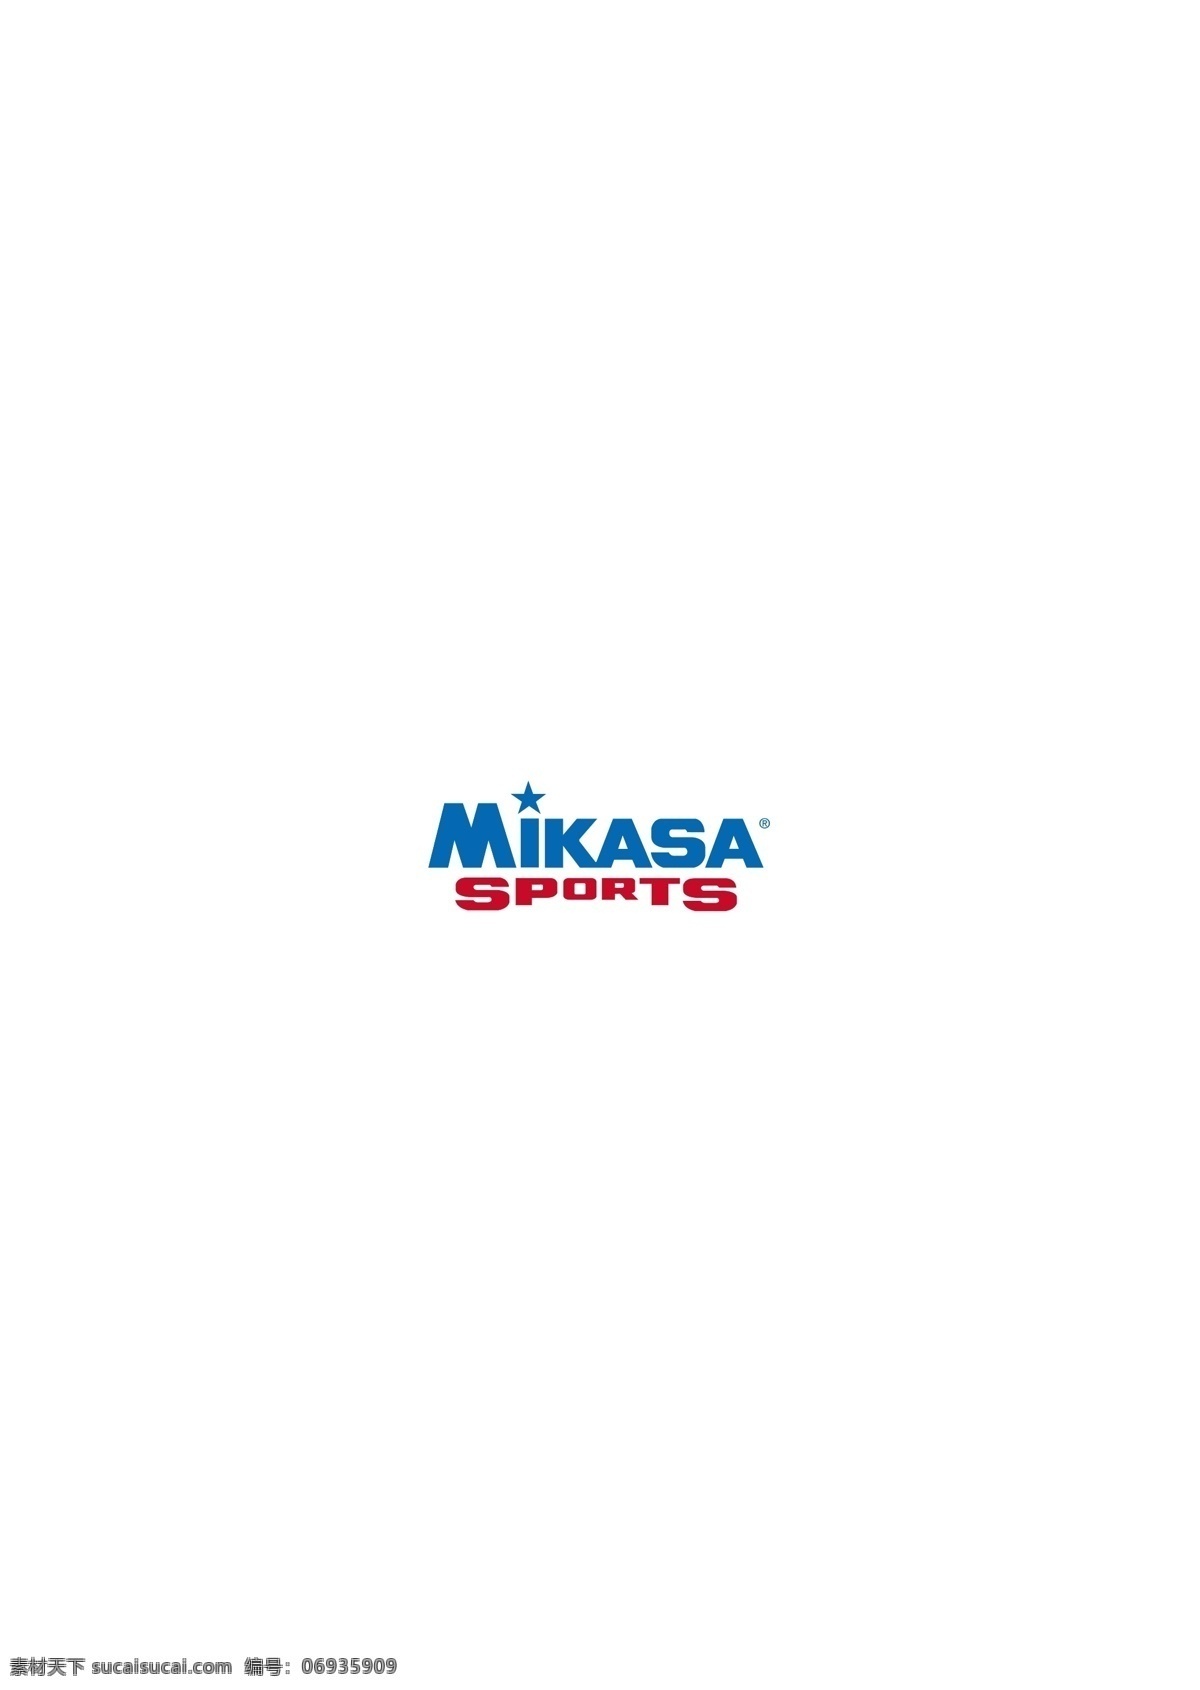 logo大全 logo 设计欣赏 商业矢量 矢量下载 mikasasports 运动 赛事 标志 标志设计 欣赏 网页矢量 矢量图 其他矢量图